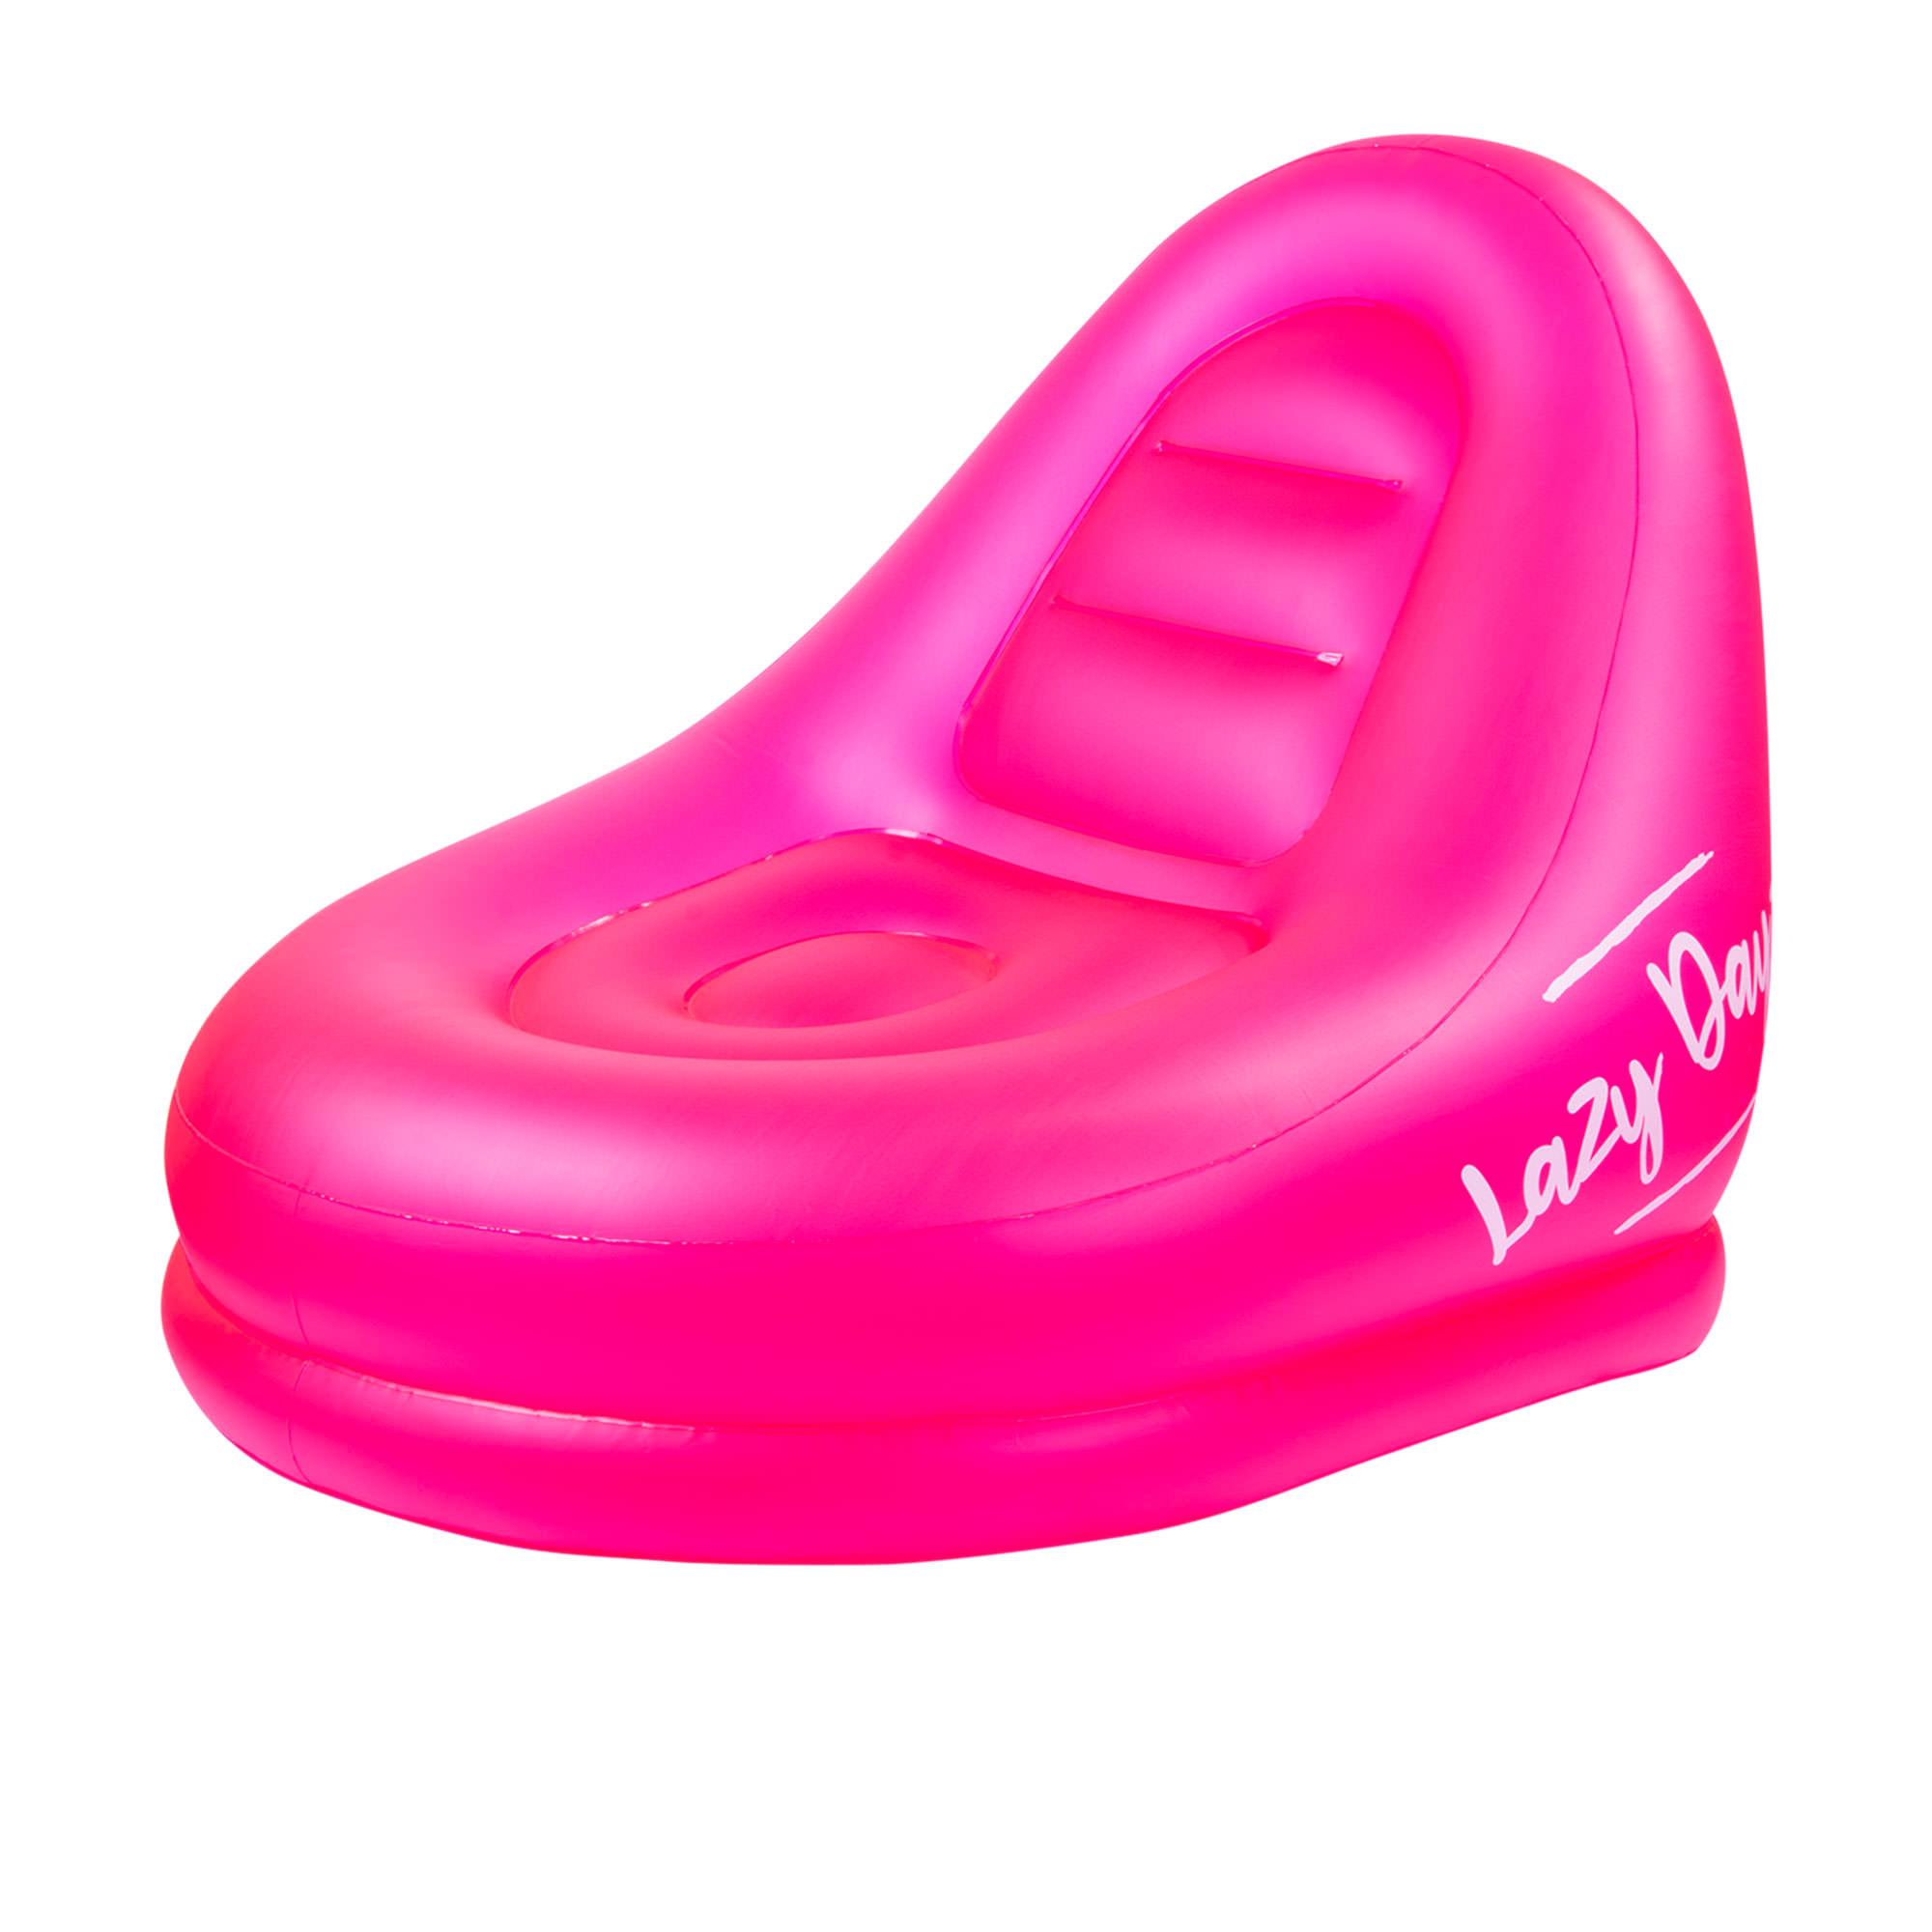 Lazy Dayz Jumbo Inflatable Chair Pink Image 1